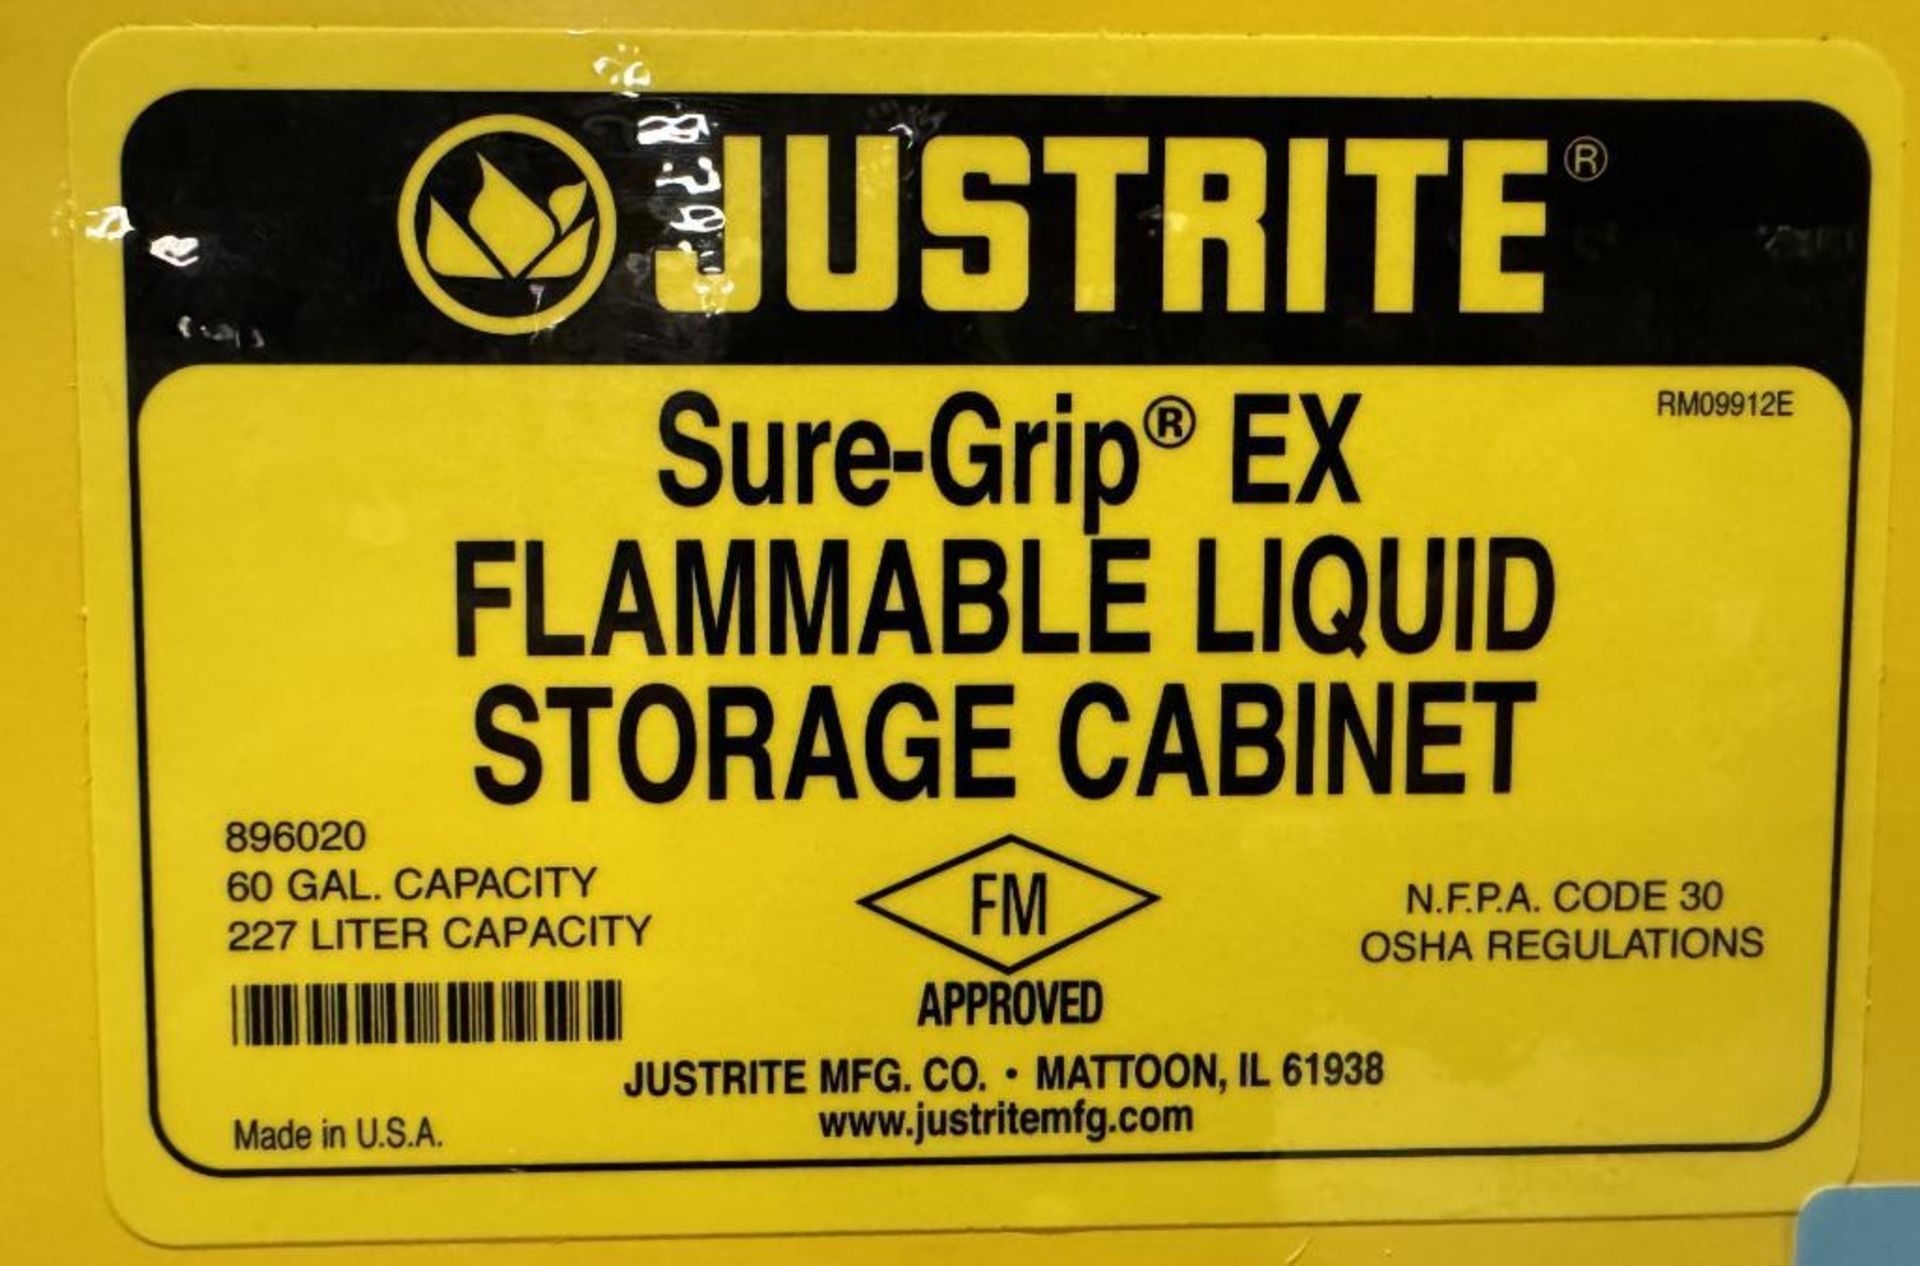 Justrite Sure-Grip EX 60 Gallon Capacity Flammable Storage Cabinet, Model 896020. - Image 4 of 4